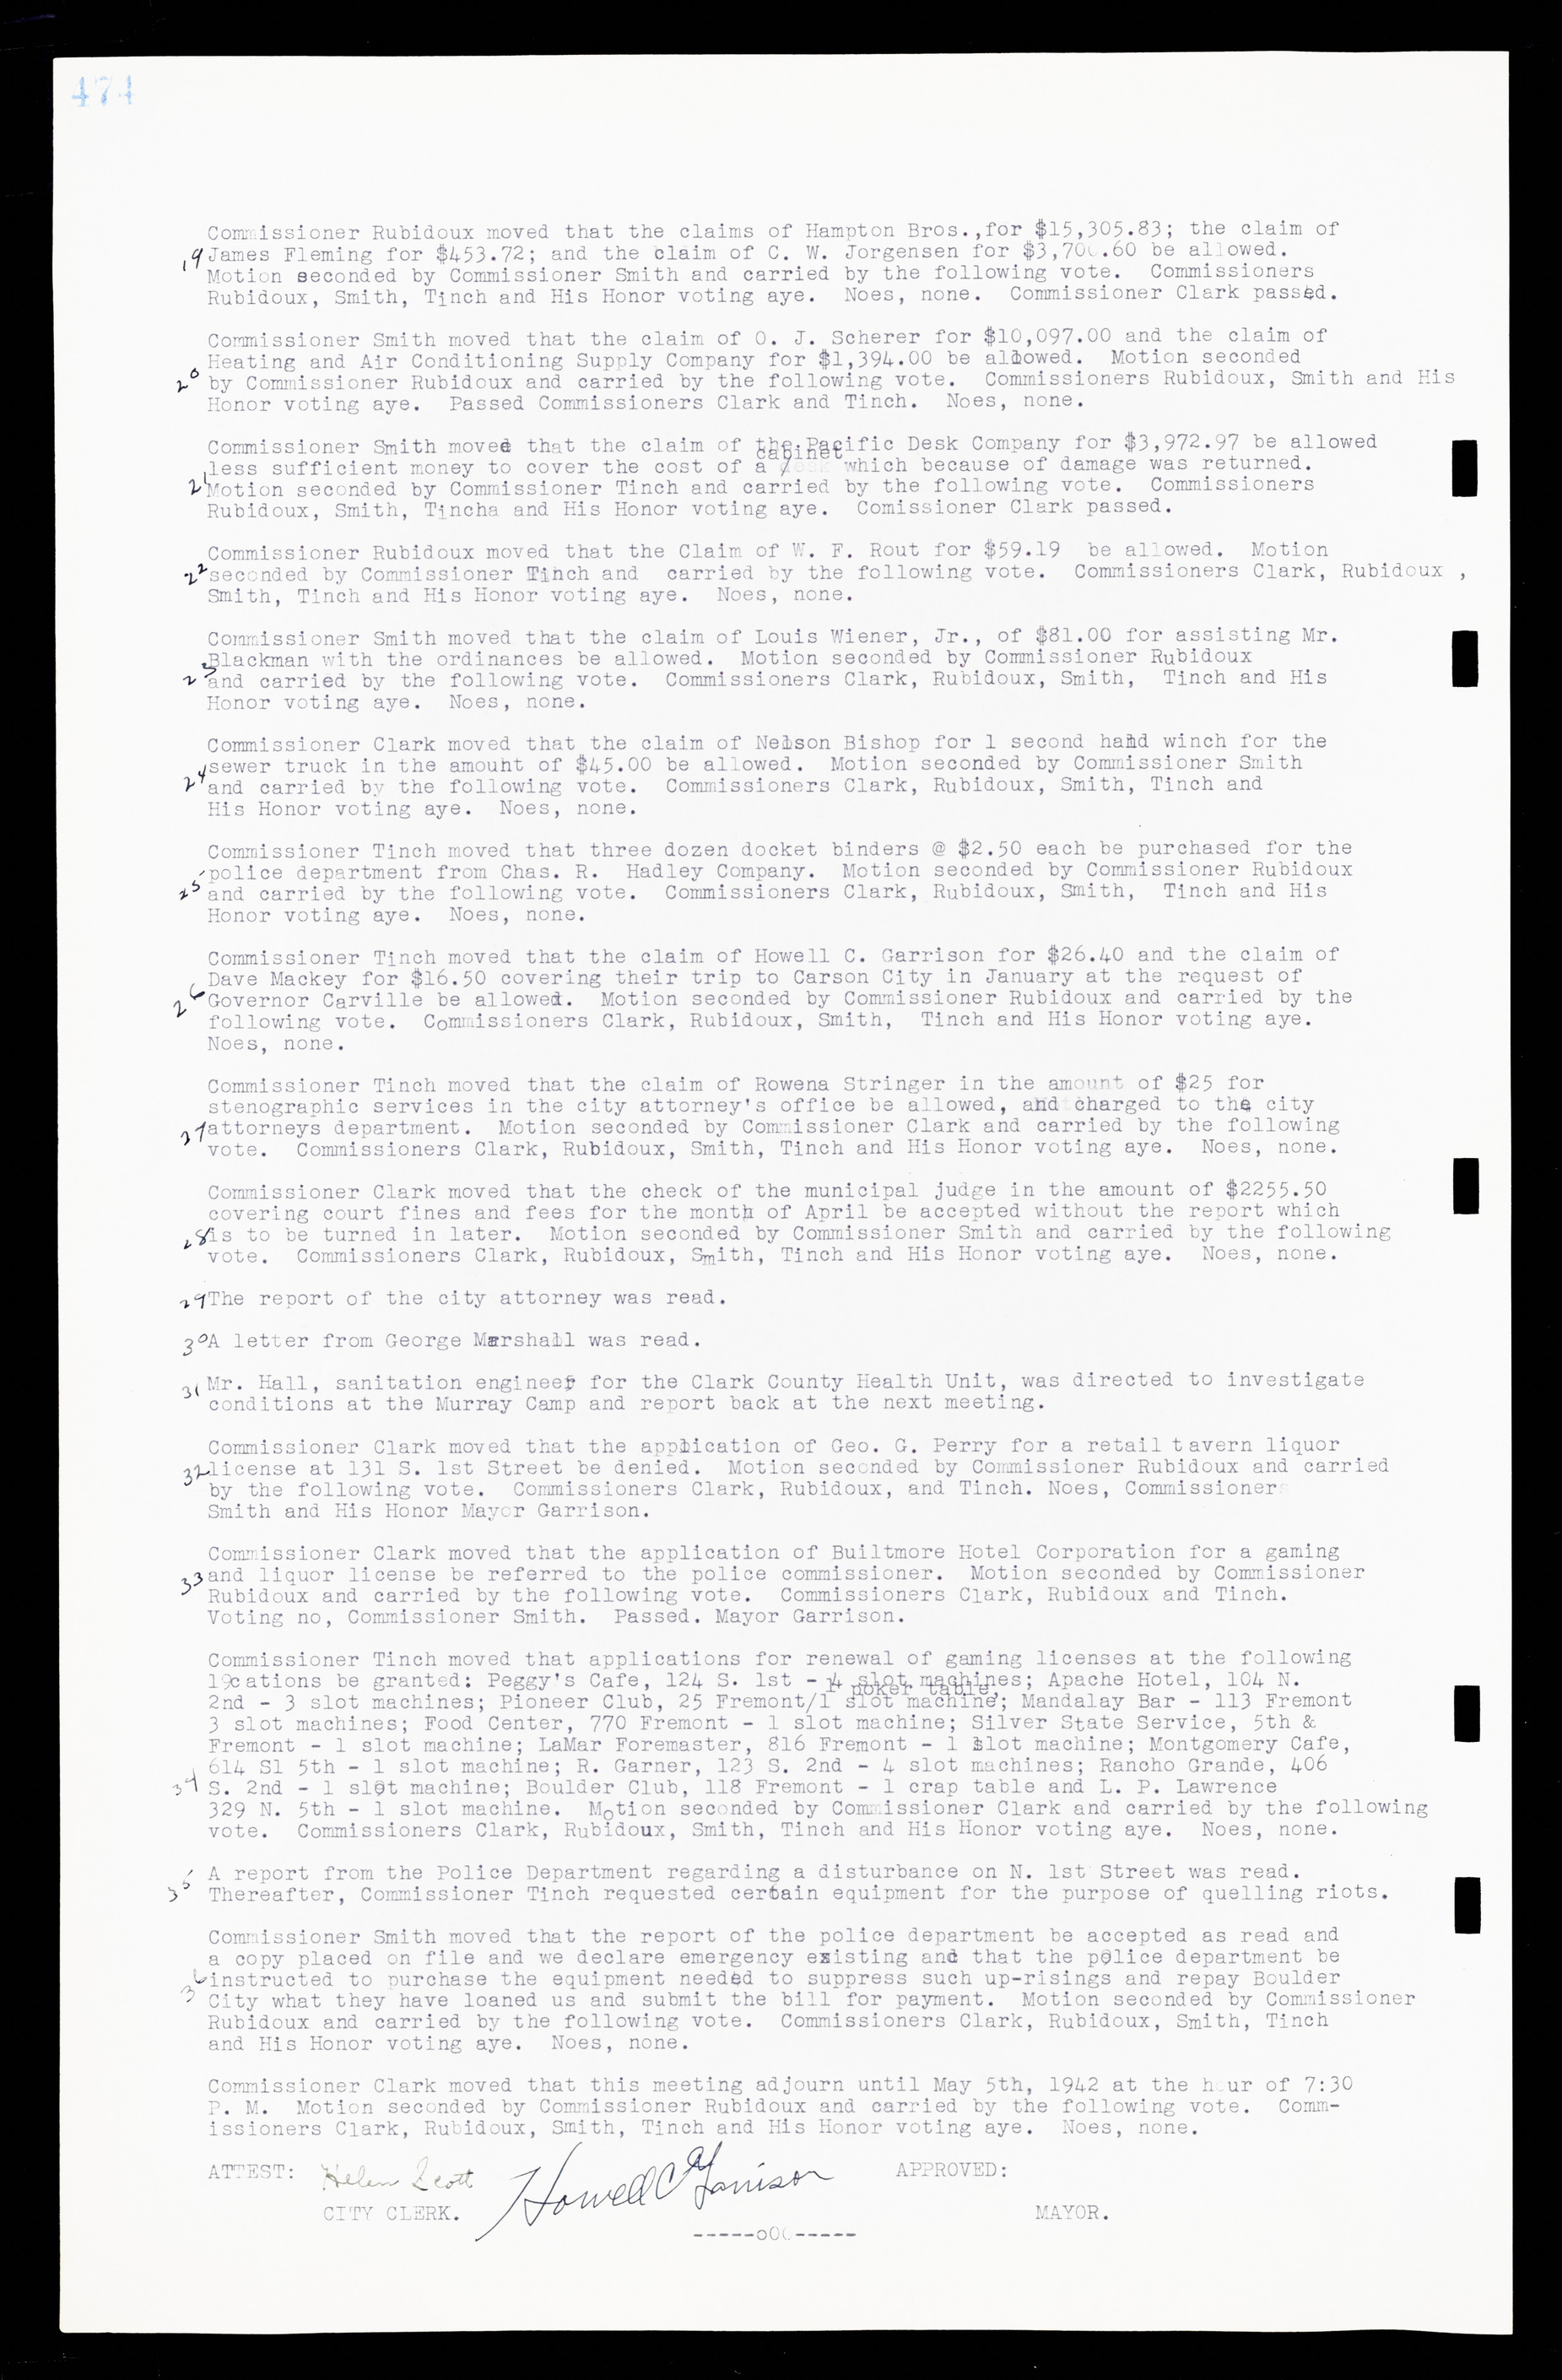 Las Vegas City Commission Minutes, February 17, 1937 to August 4, 1942, lvc000004-502